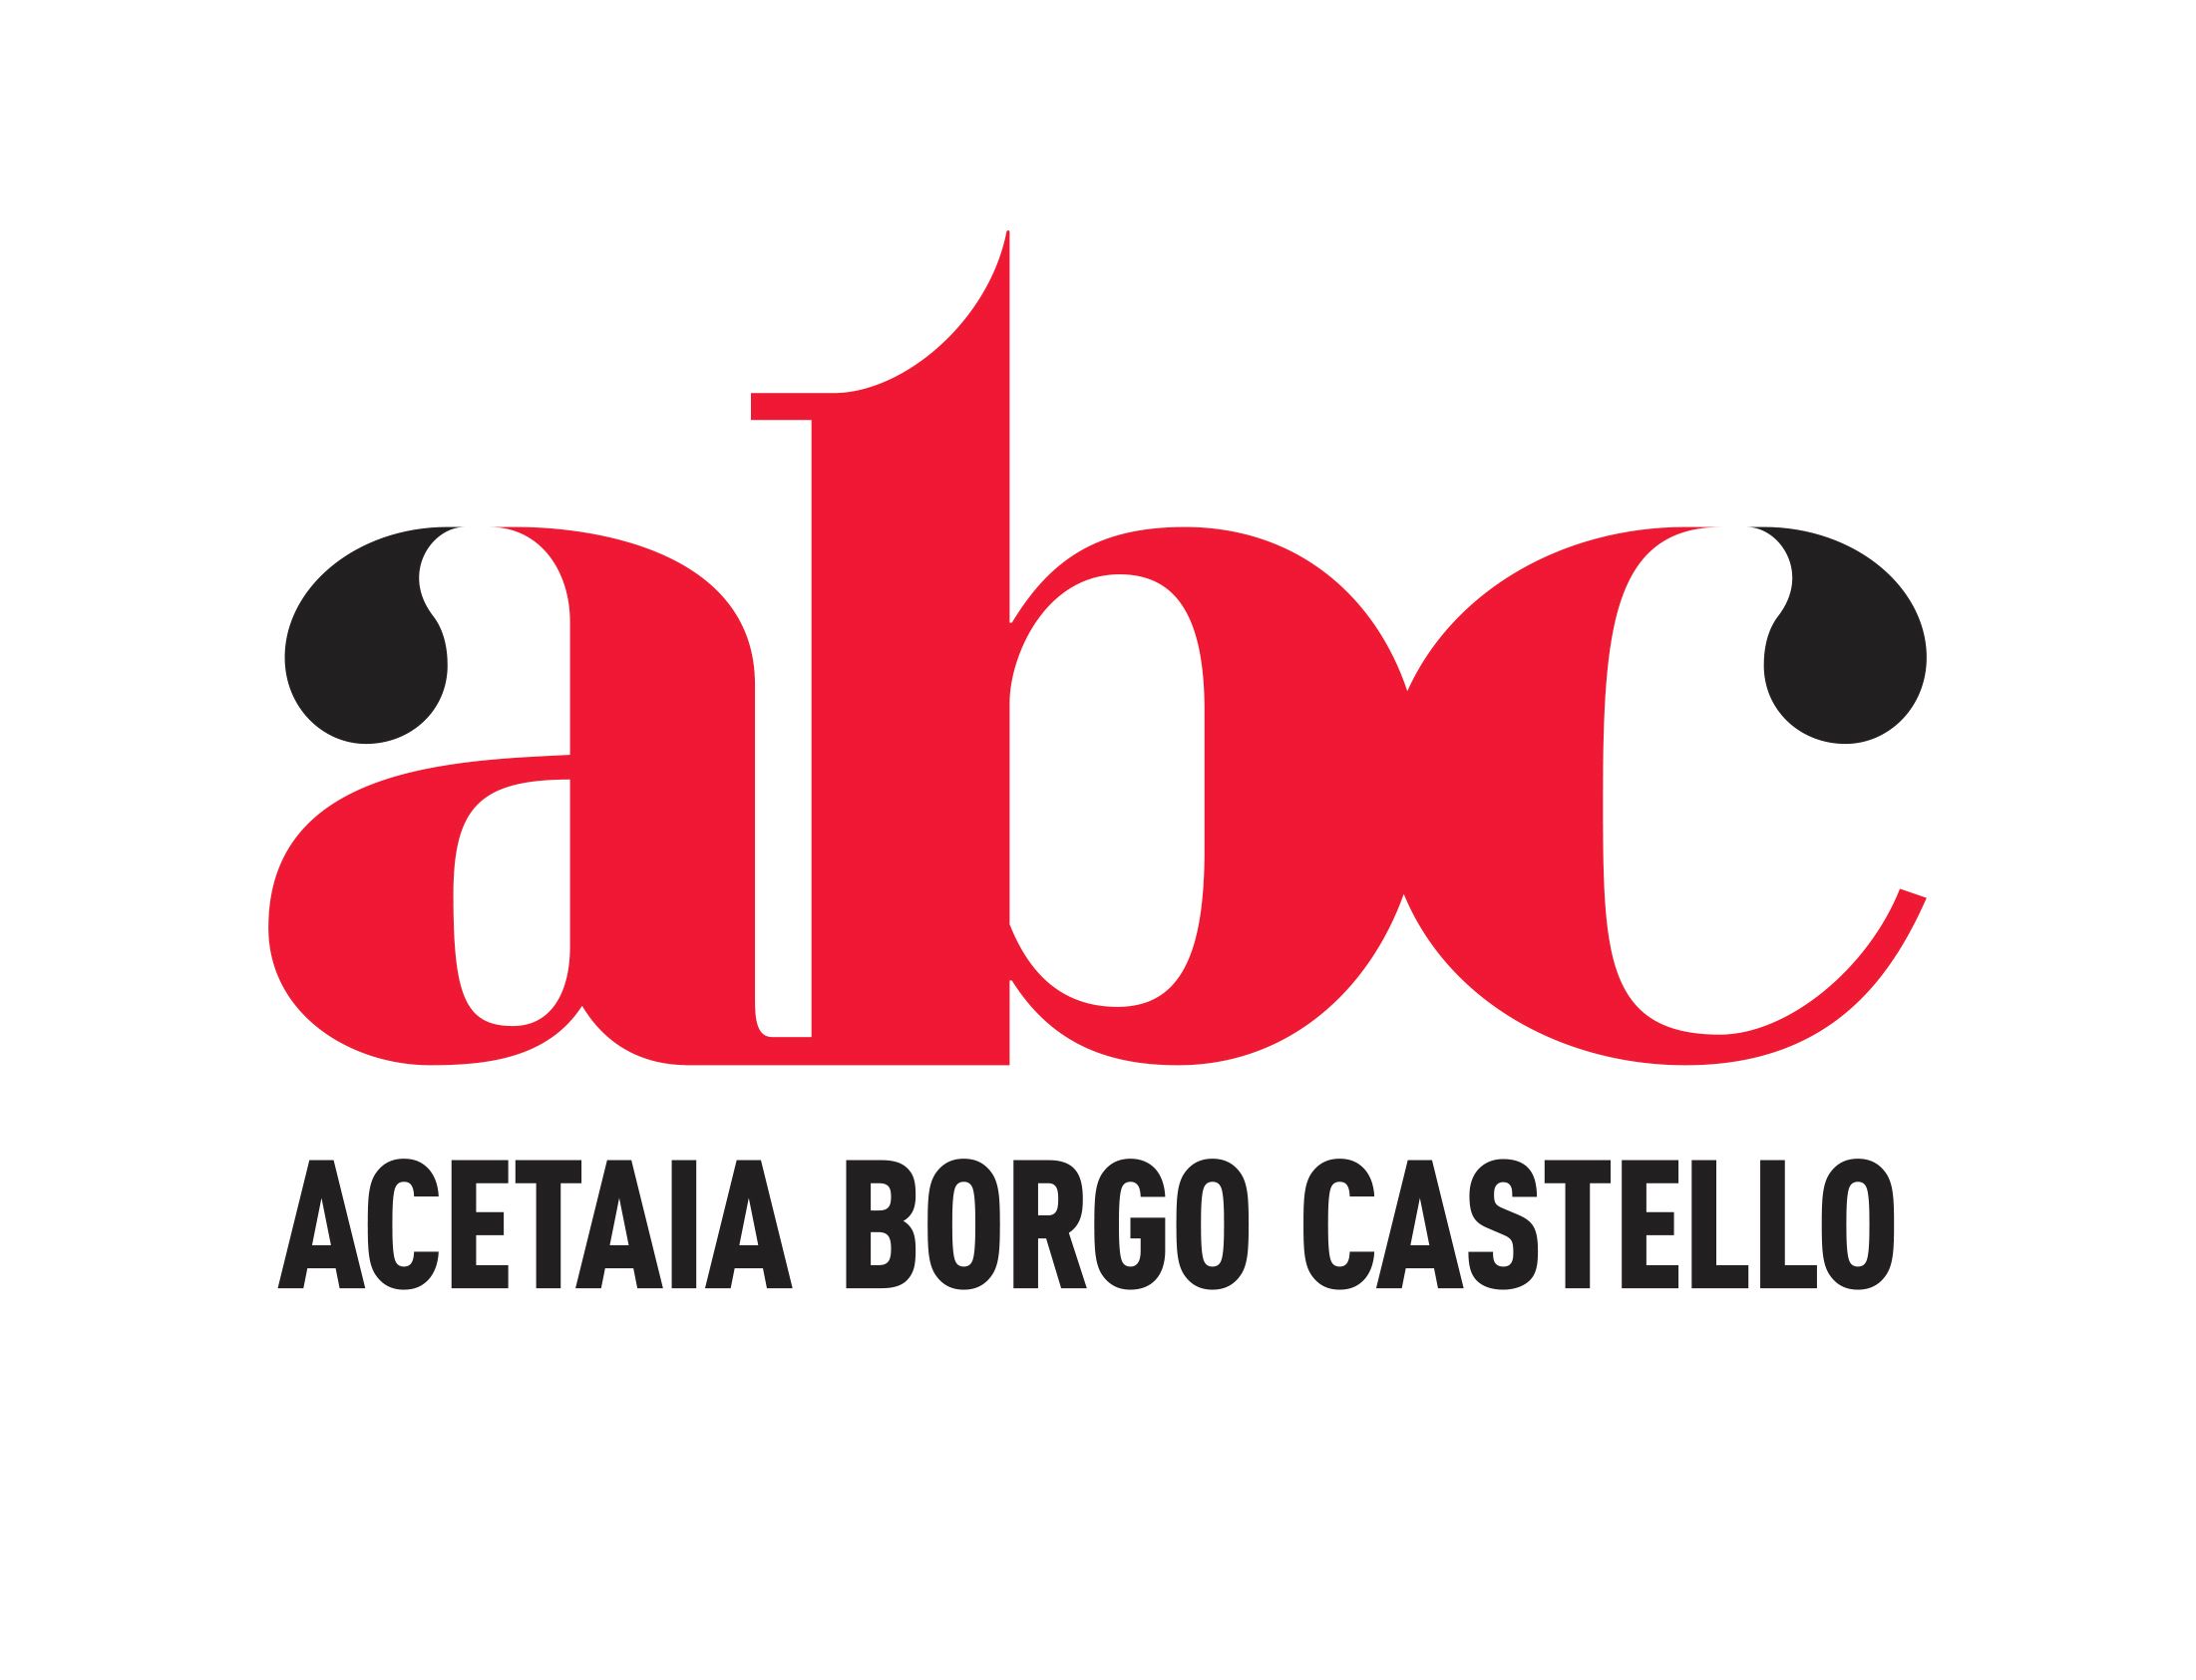 ACETAIA BORGO CASTELLO